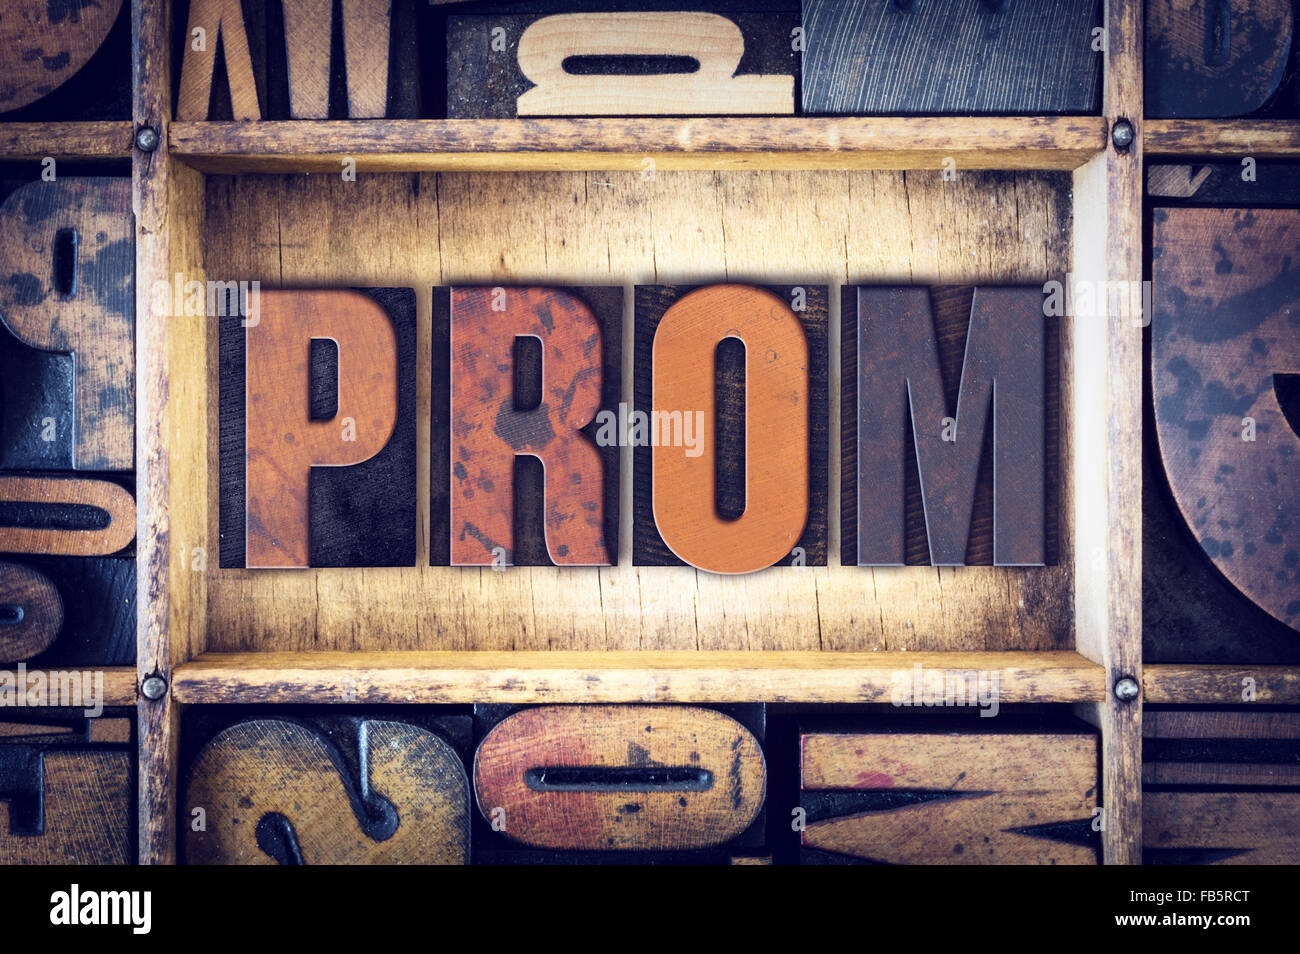 The word 'Prom' written in vintage wooden letterpress type. Stock Photo